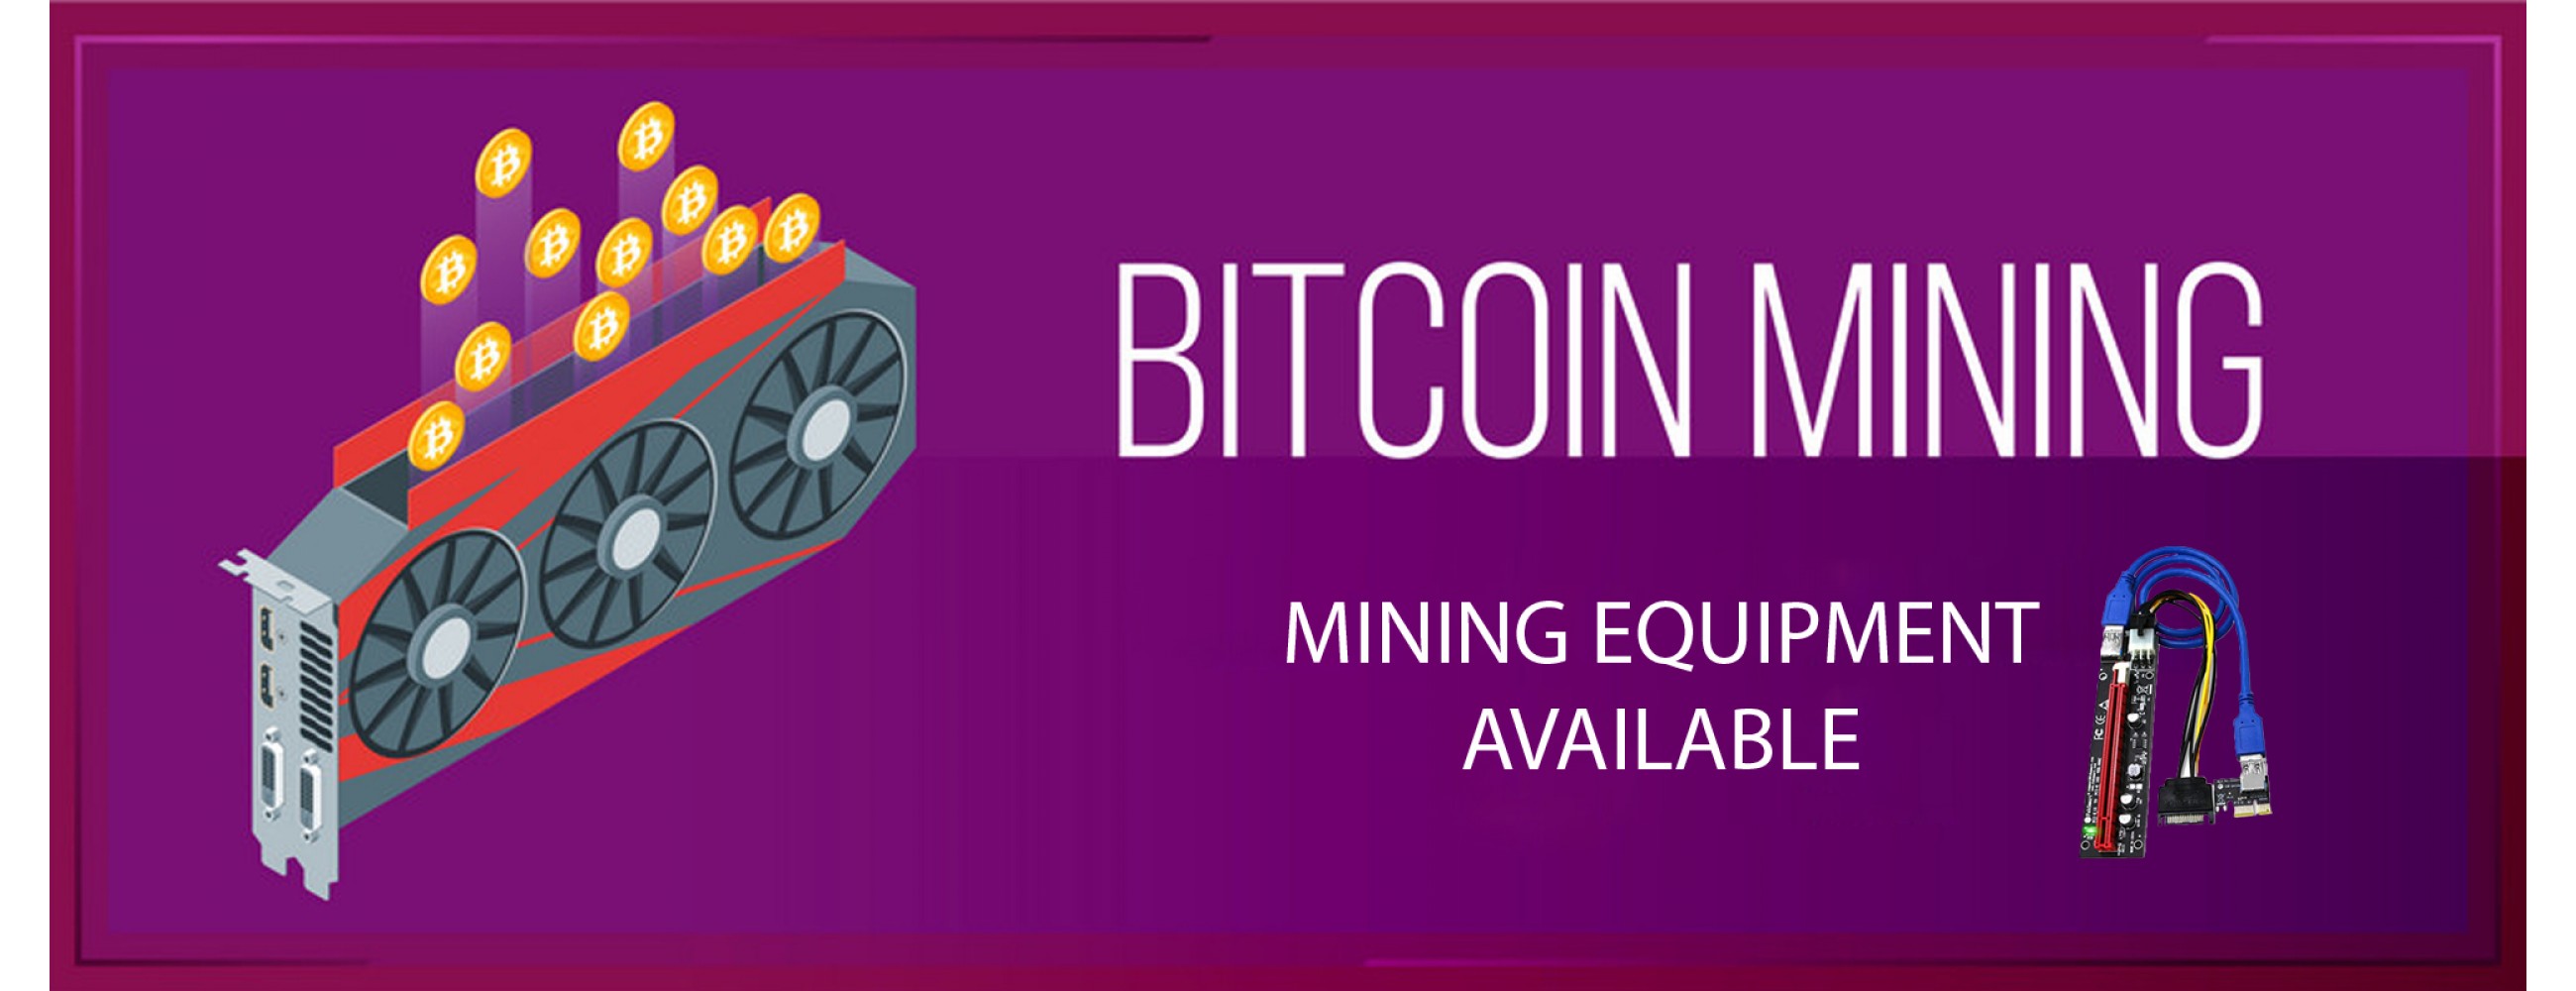 Bitcoin Mining Equipment